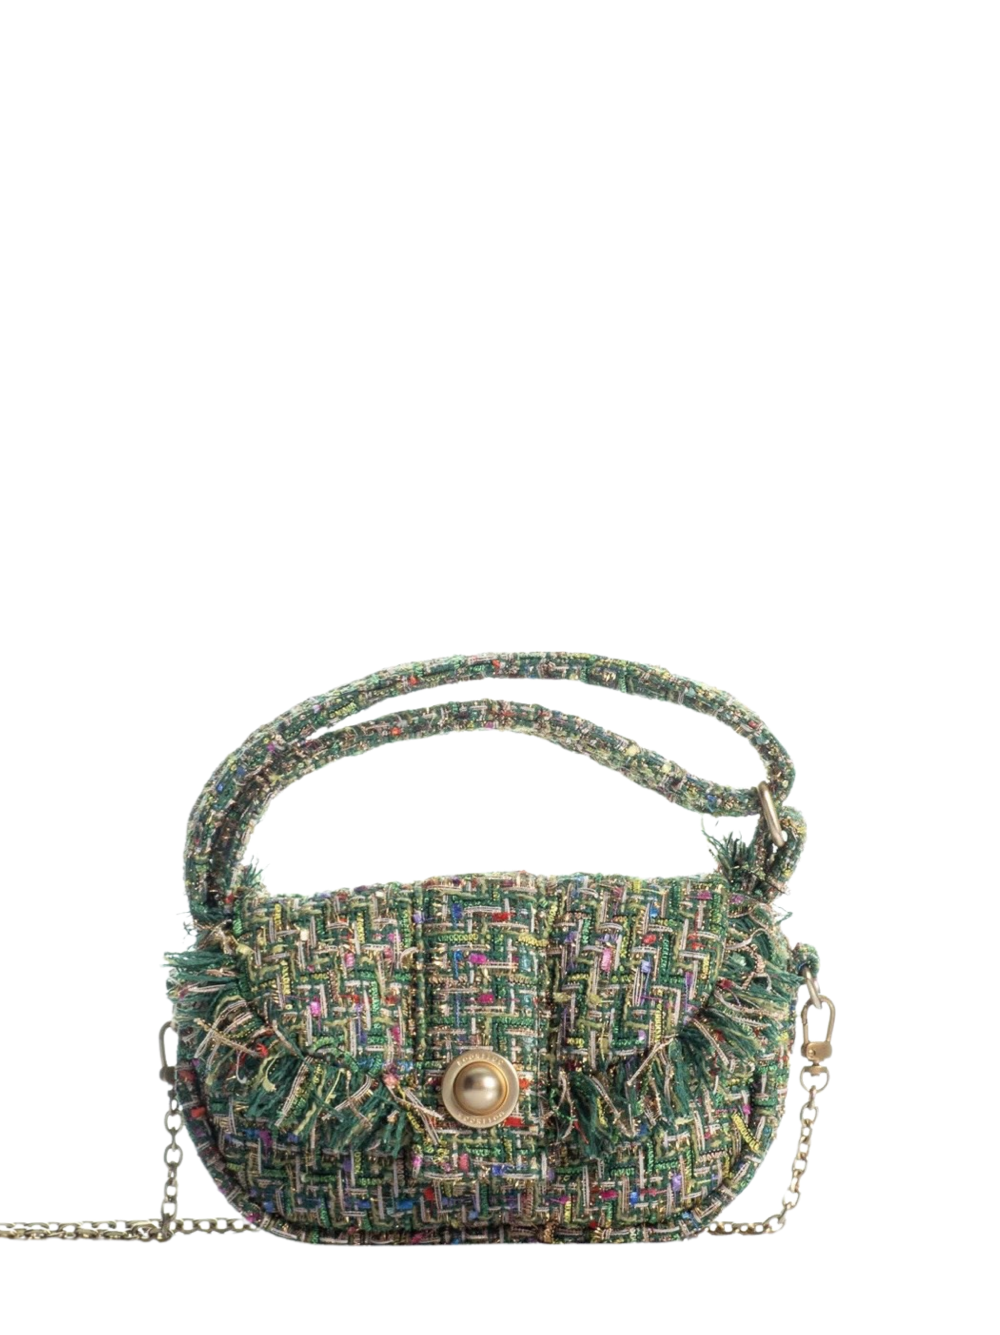 Kooreloo The Claudina Handbag in Multi Green